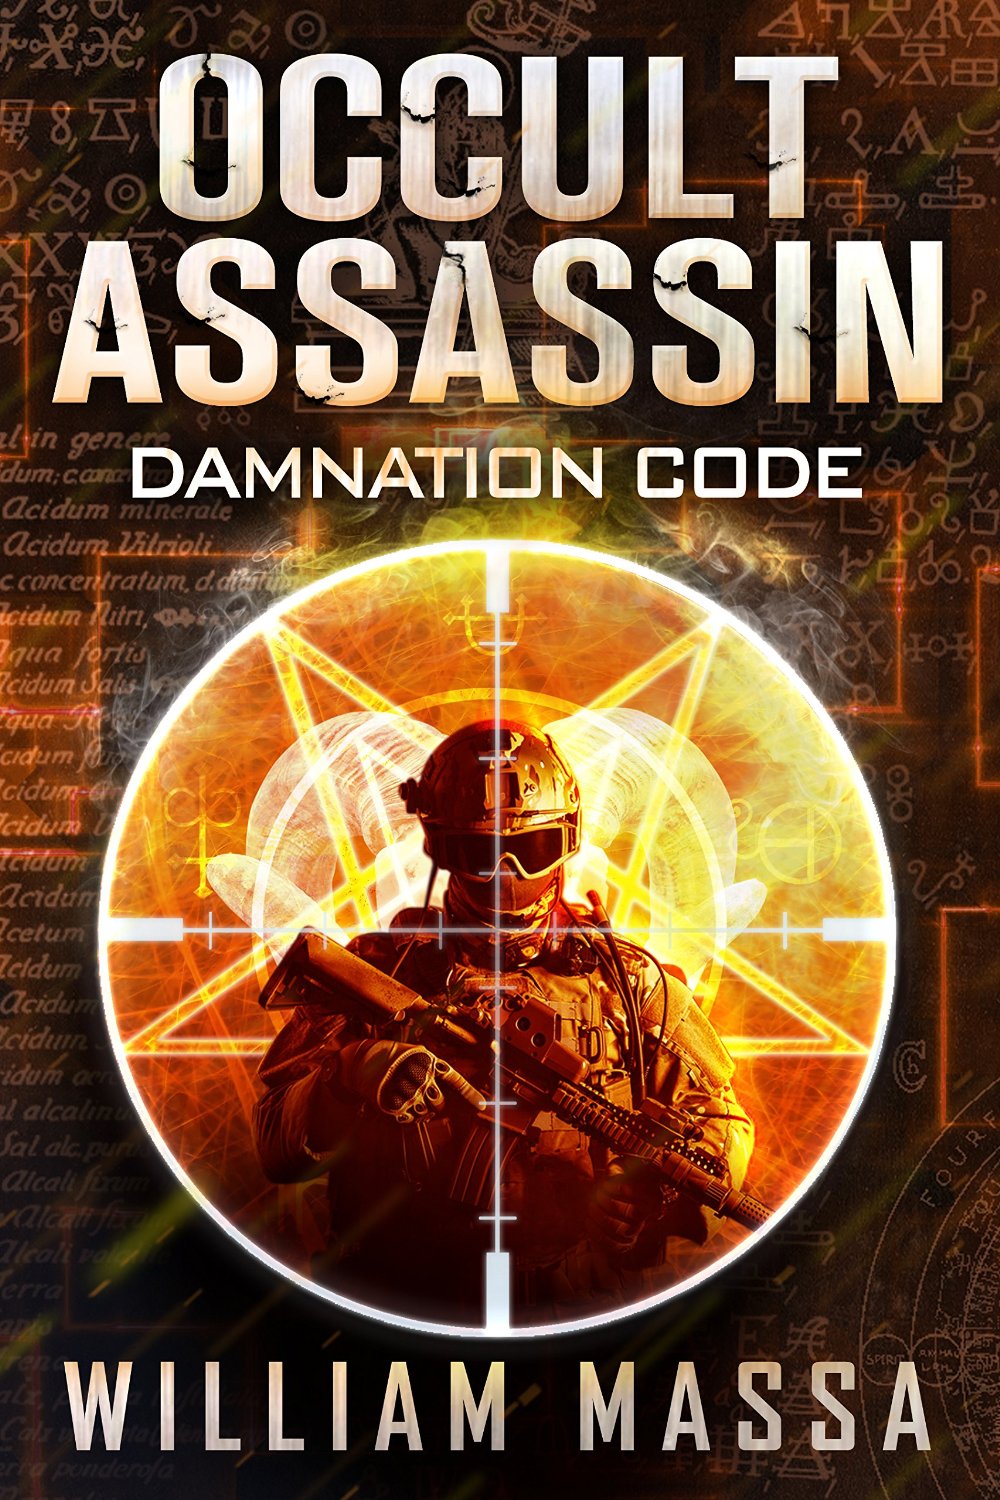 Occult Assassin #1: Damnation Code by William Massa